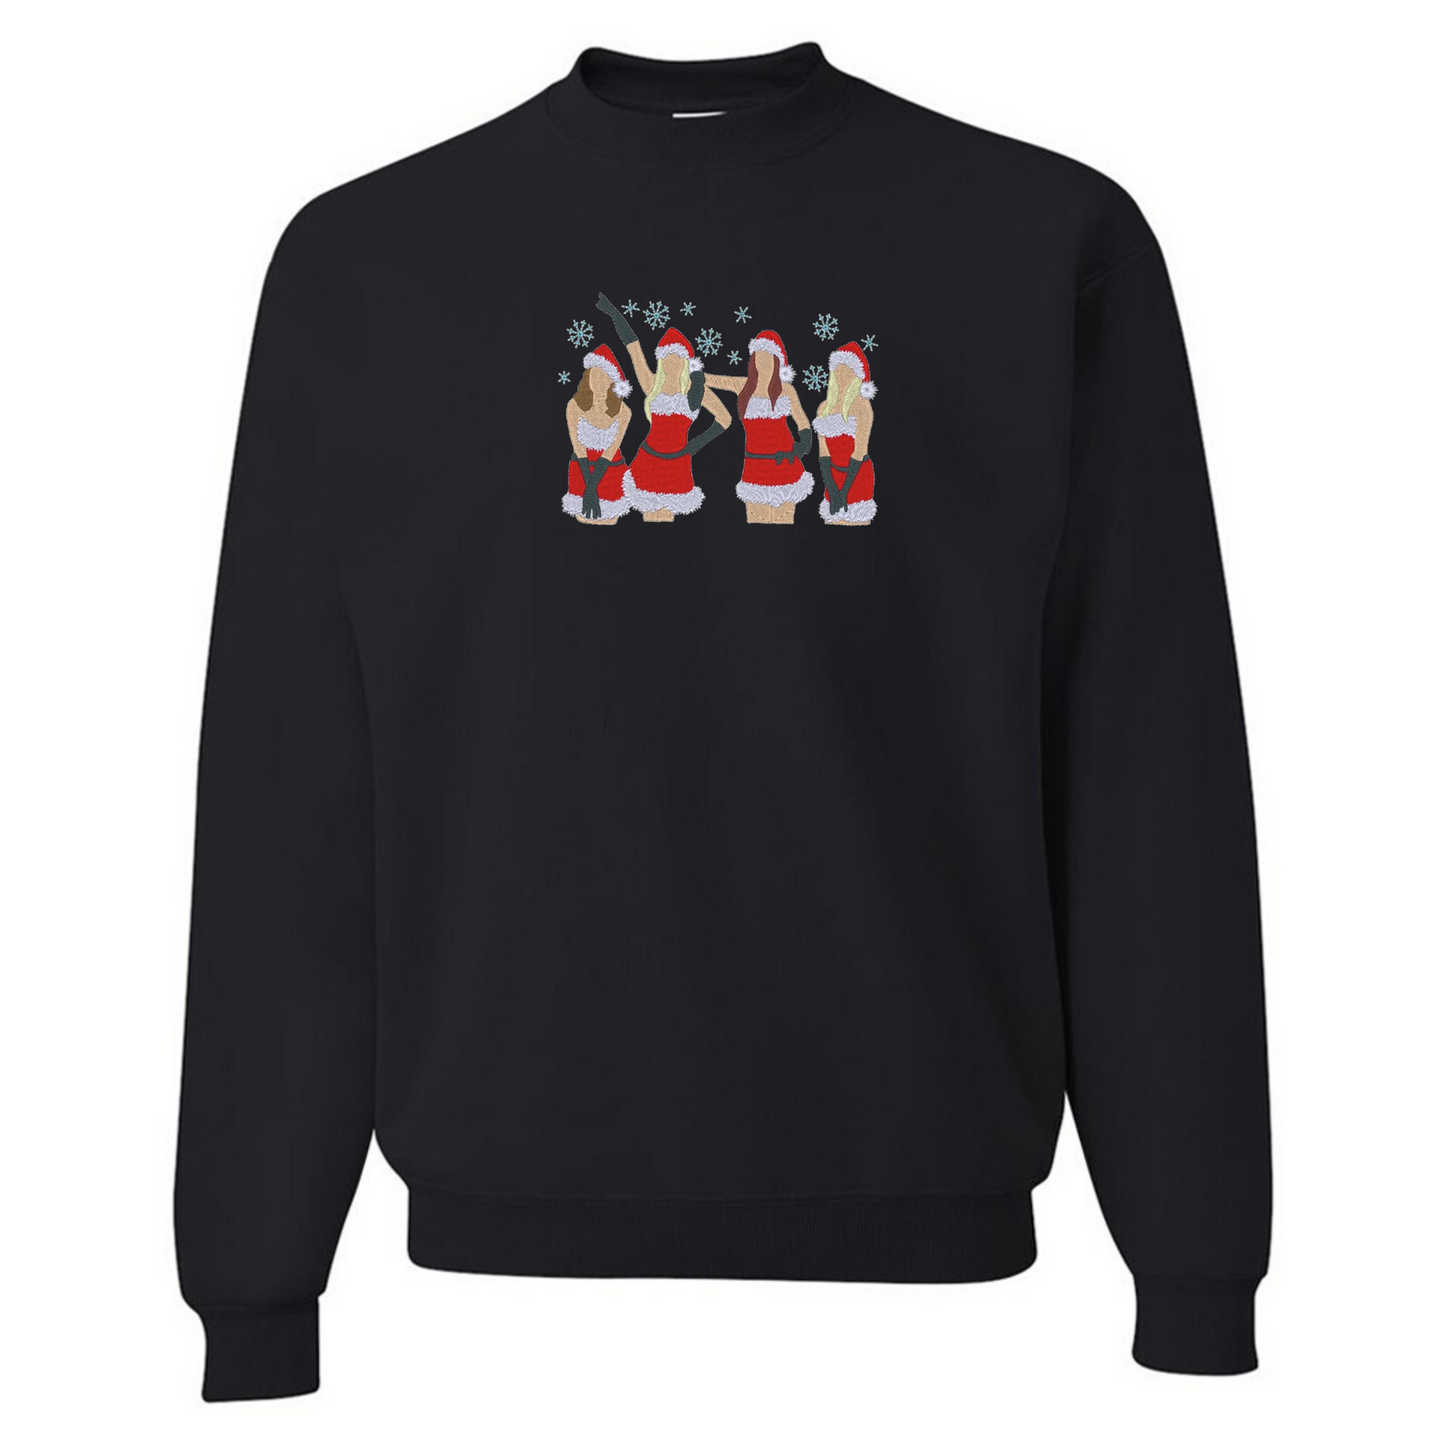 'Christmas Mean Girls' Embroidered Crewneck Sweatshirt